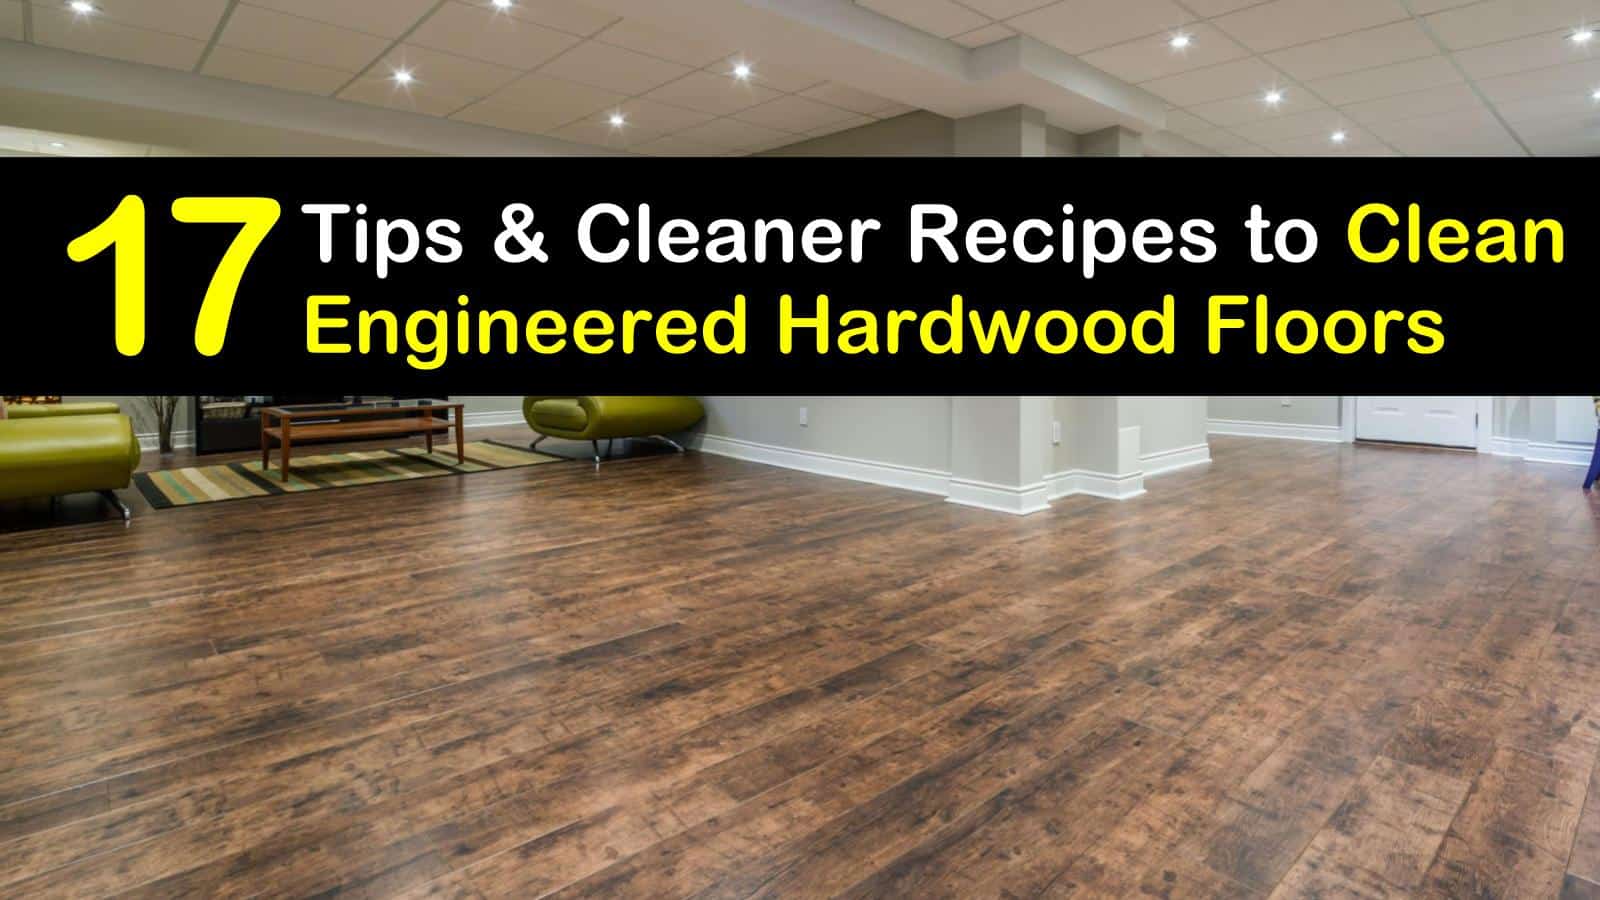 Clean Engineered Hardwood Floors, Best Way To Clean Hardwood Floors Without Residue